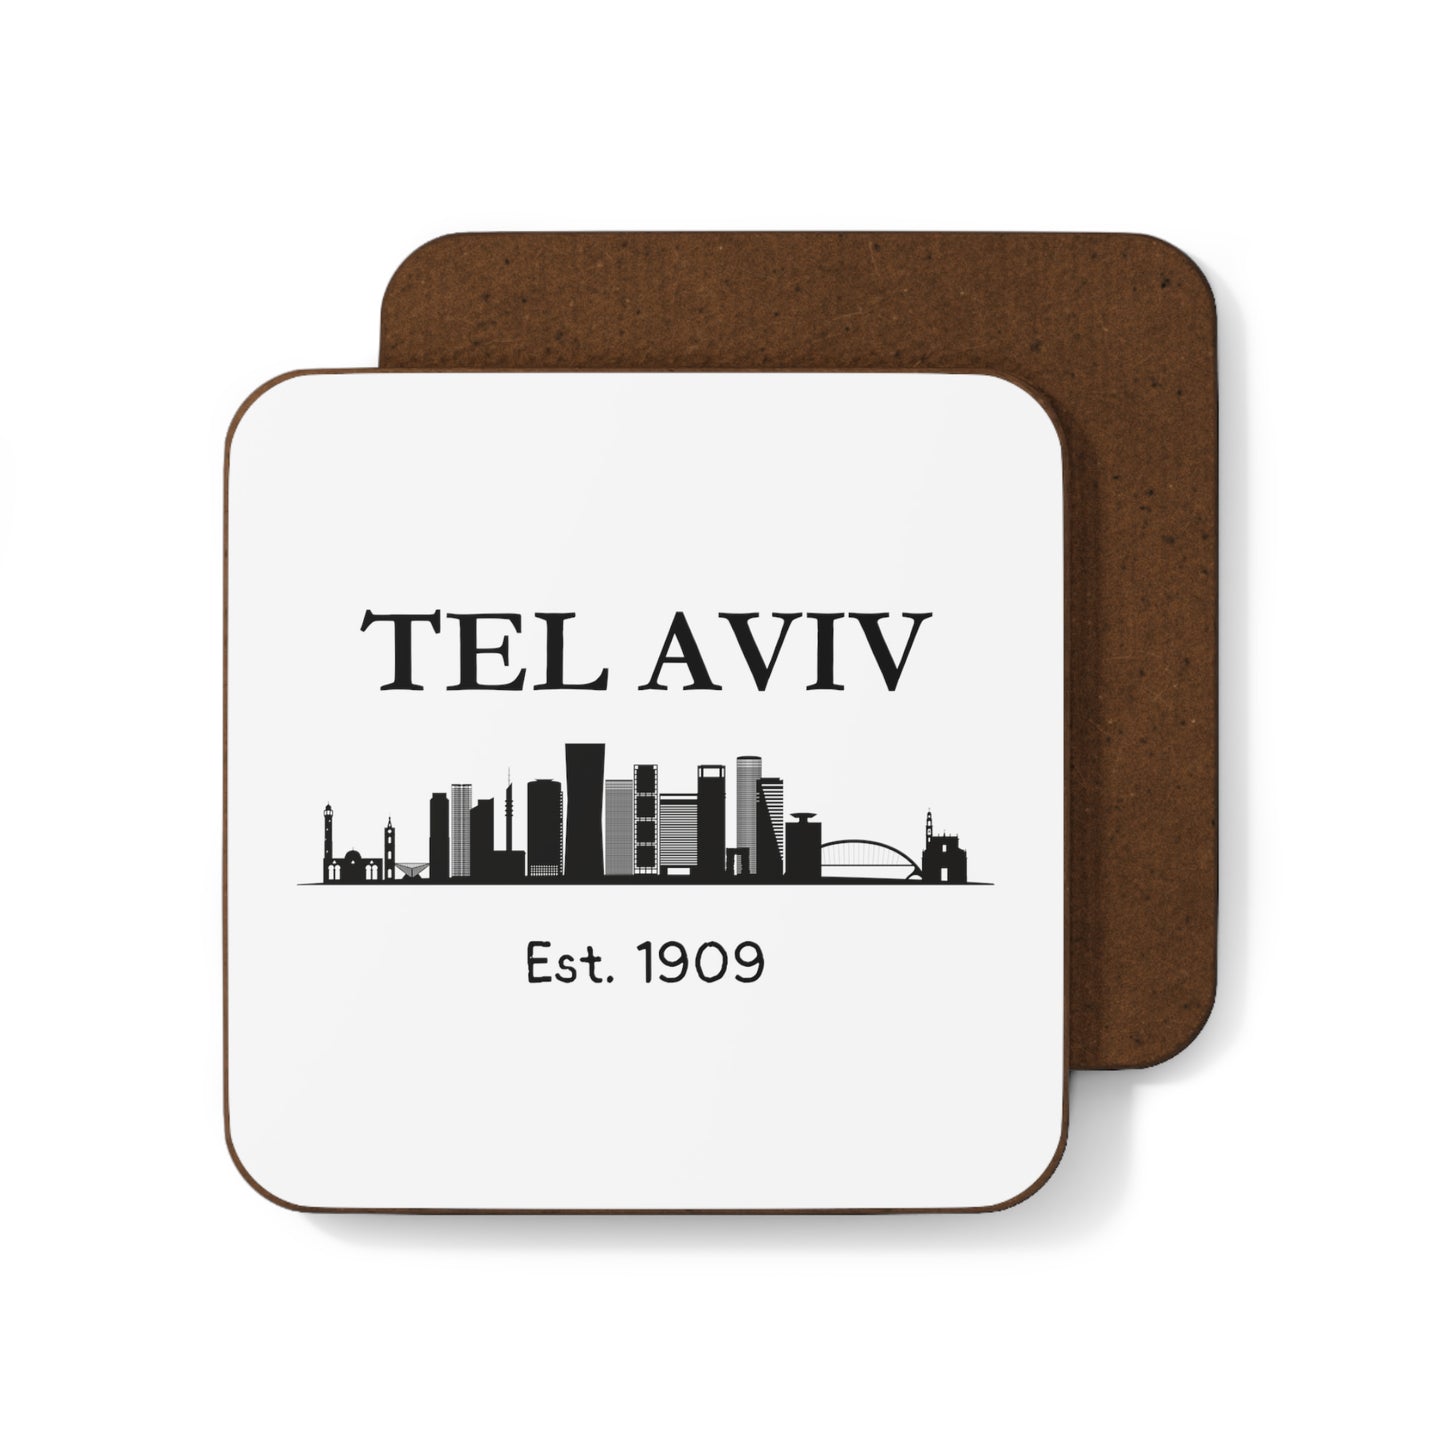 Tel Aviv - Est. 1909 Coaster